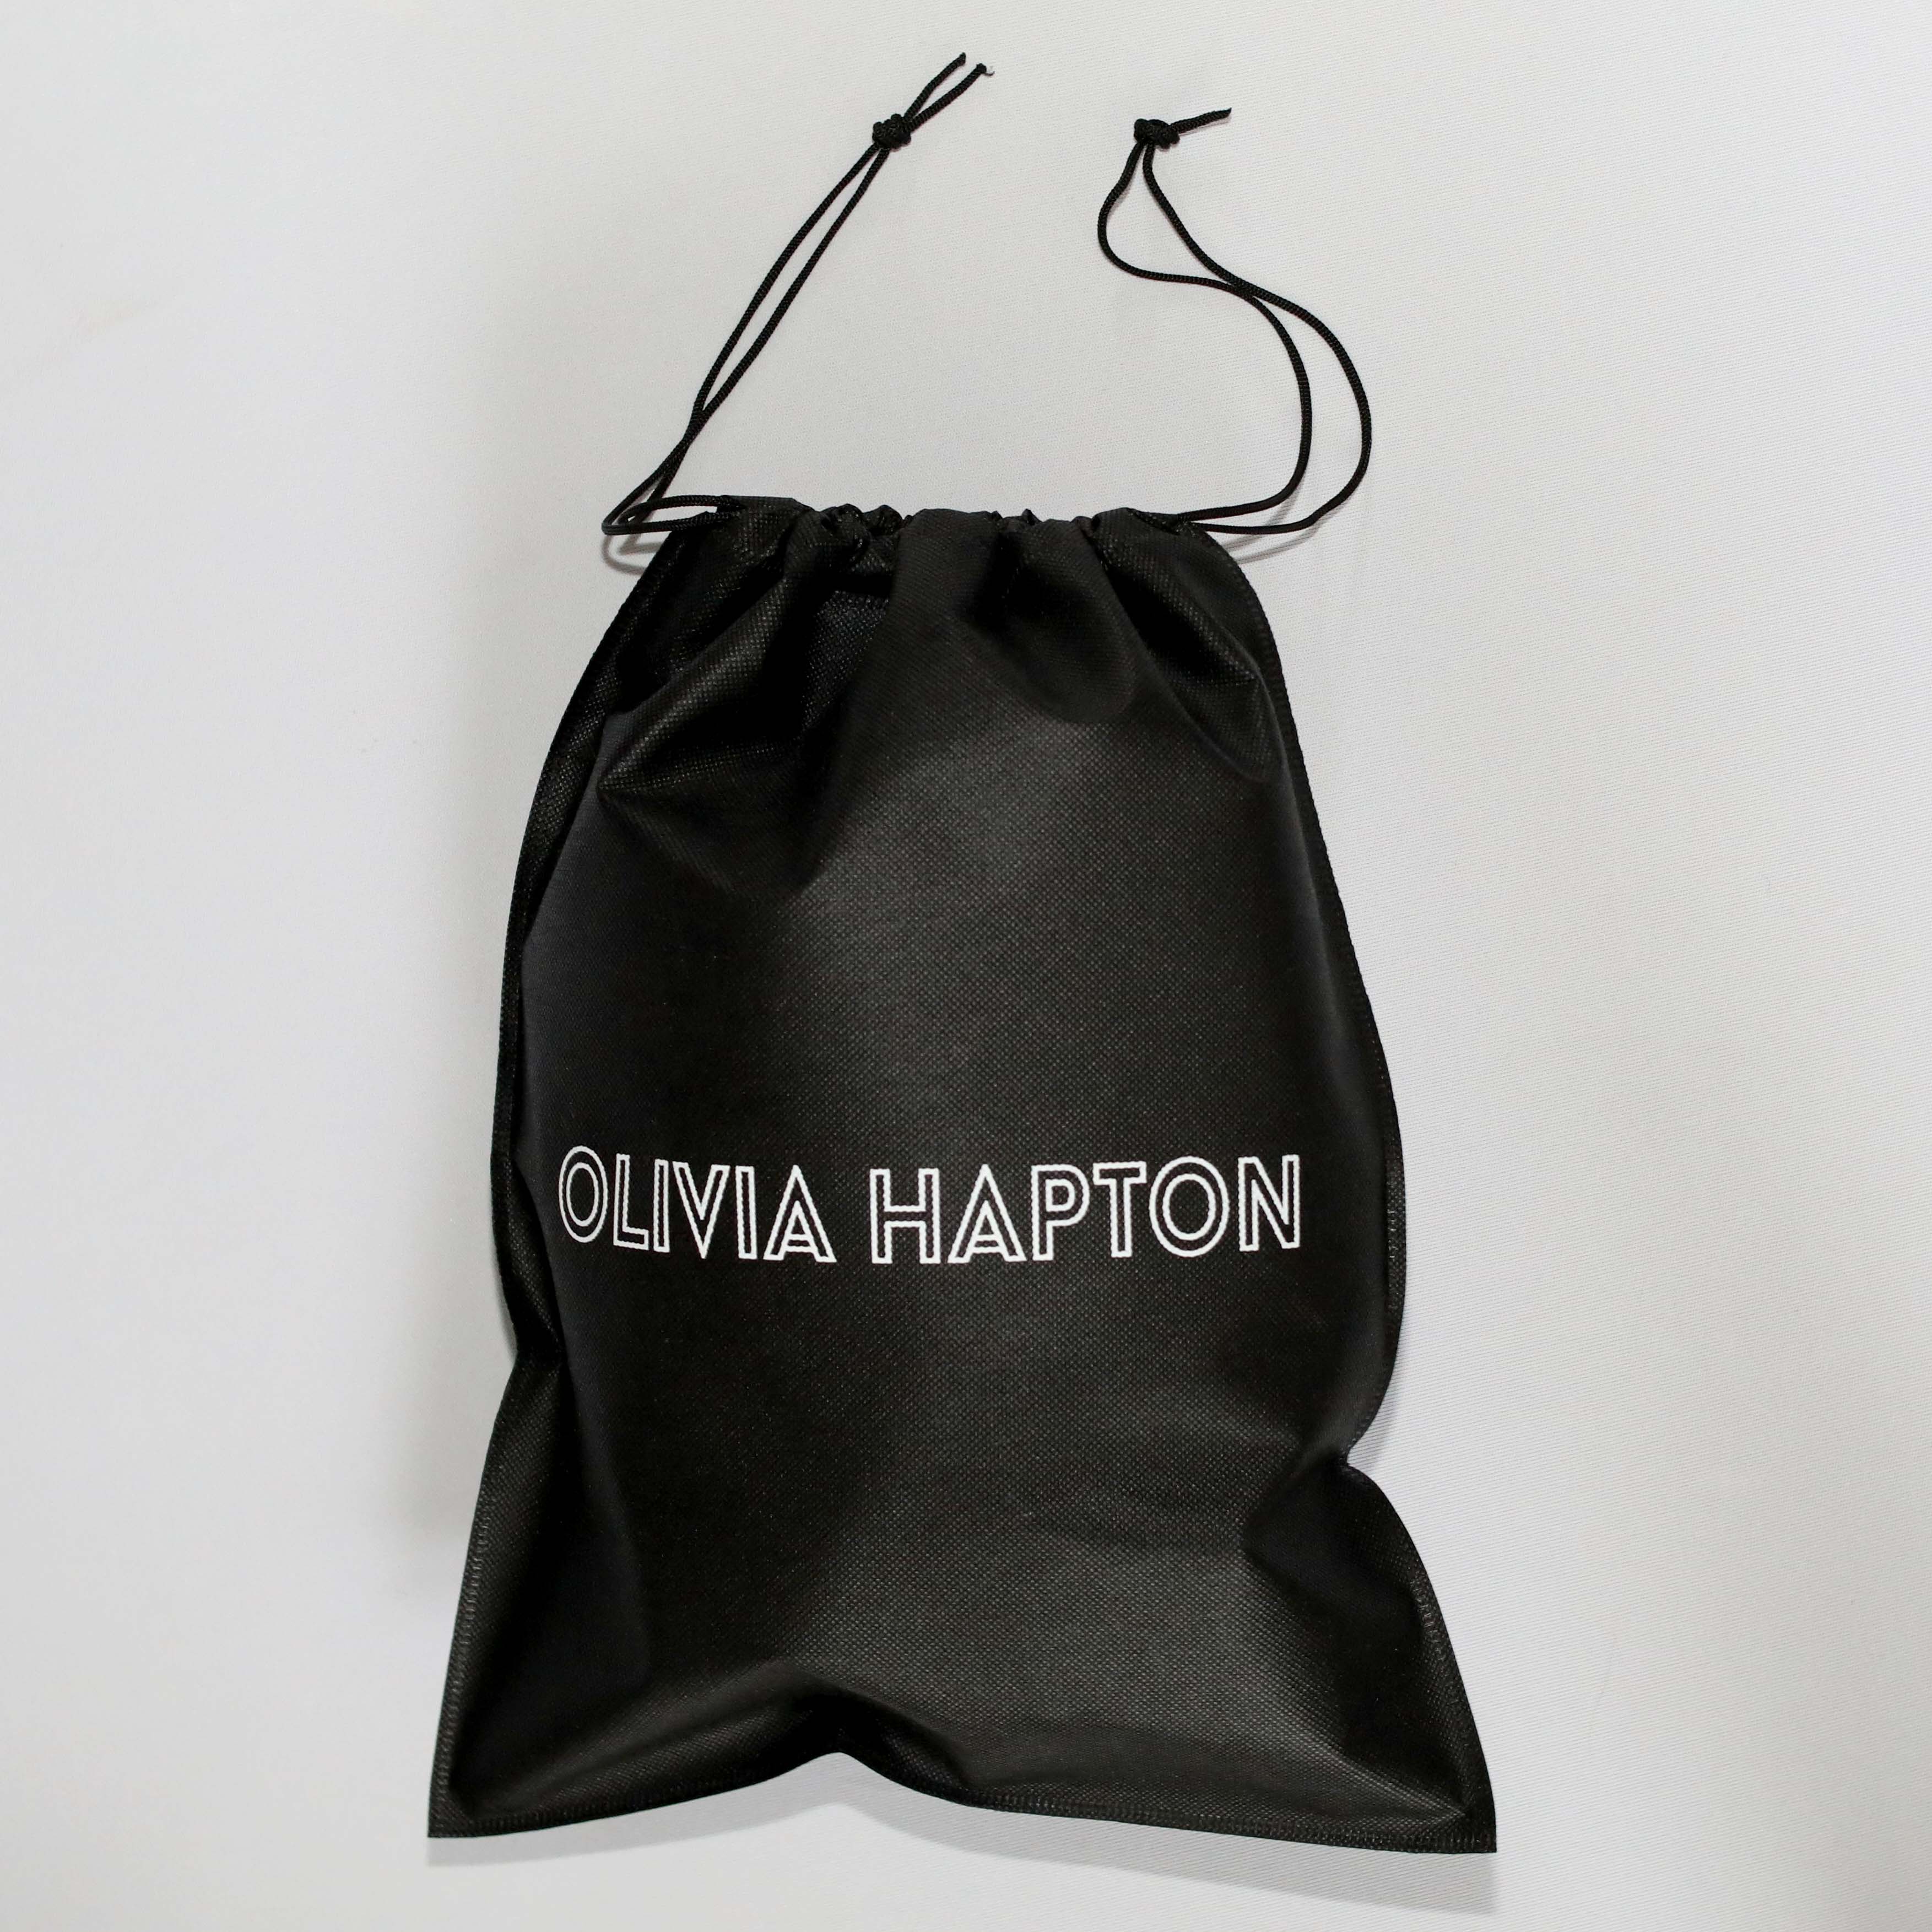 Olivia Hapton slipper tie-dye - WHITE SNAKE